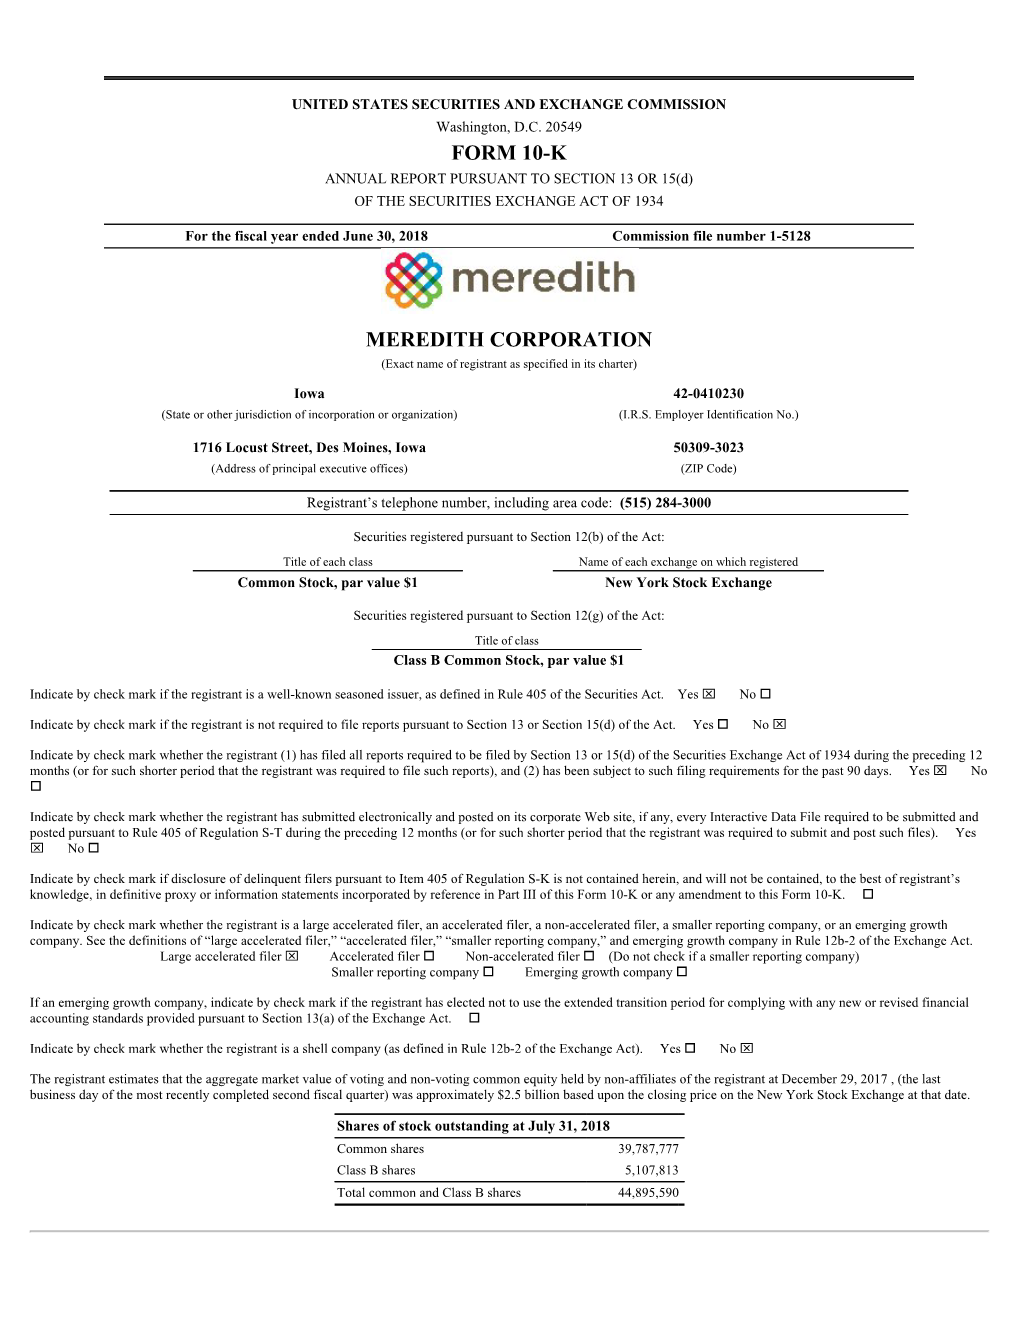 Form 10-K Meredith Corporation